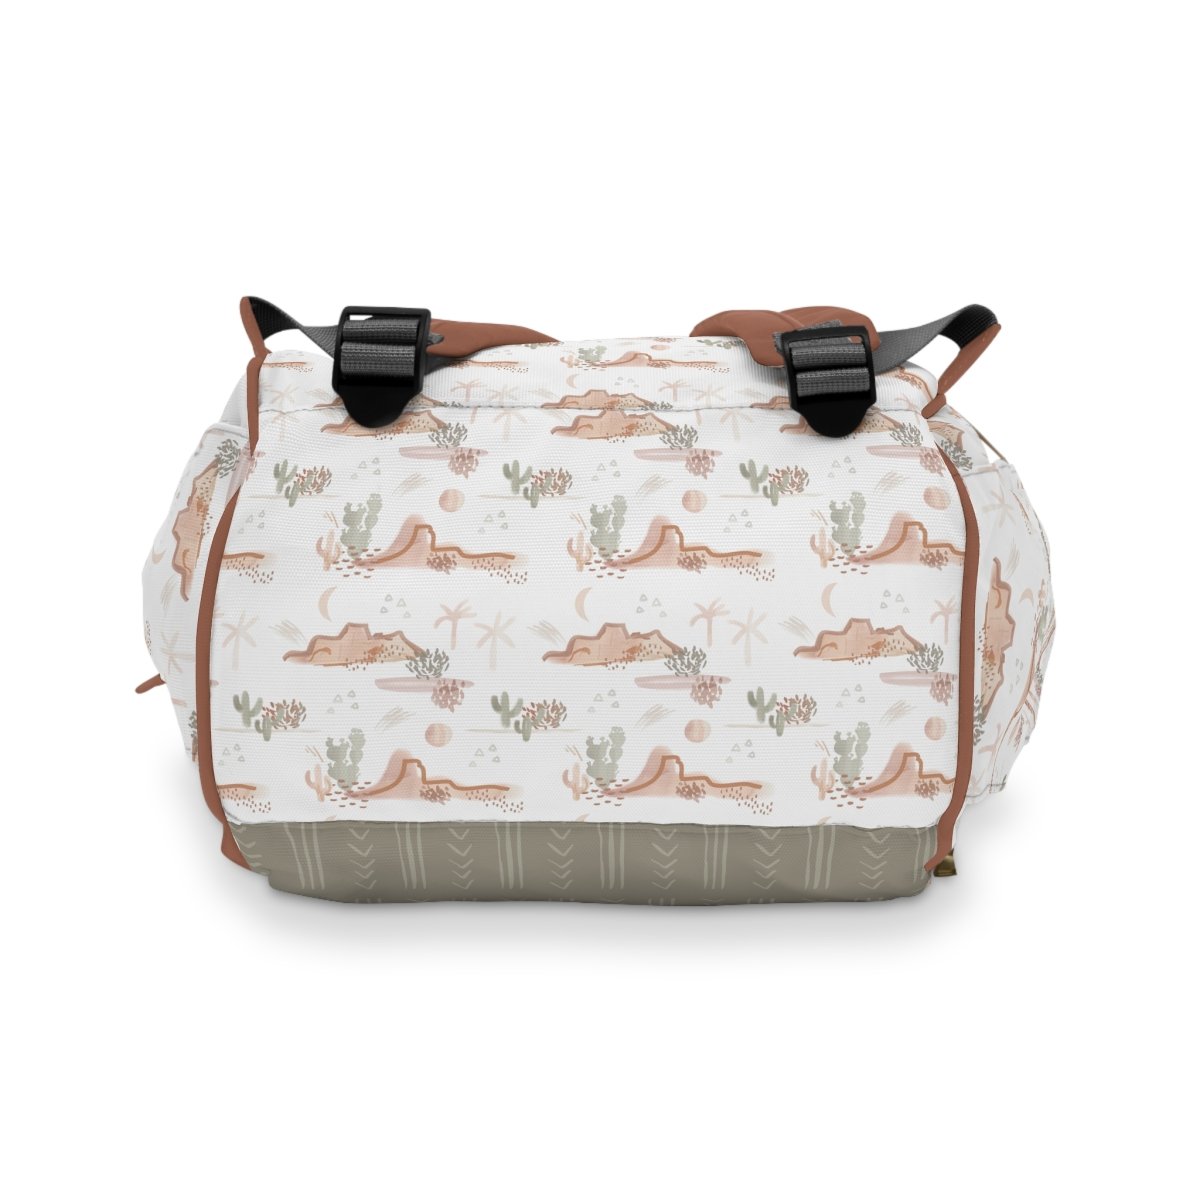 Boho Desert Personalized Backpack Diaper Bag - Backpack